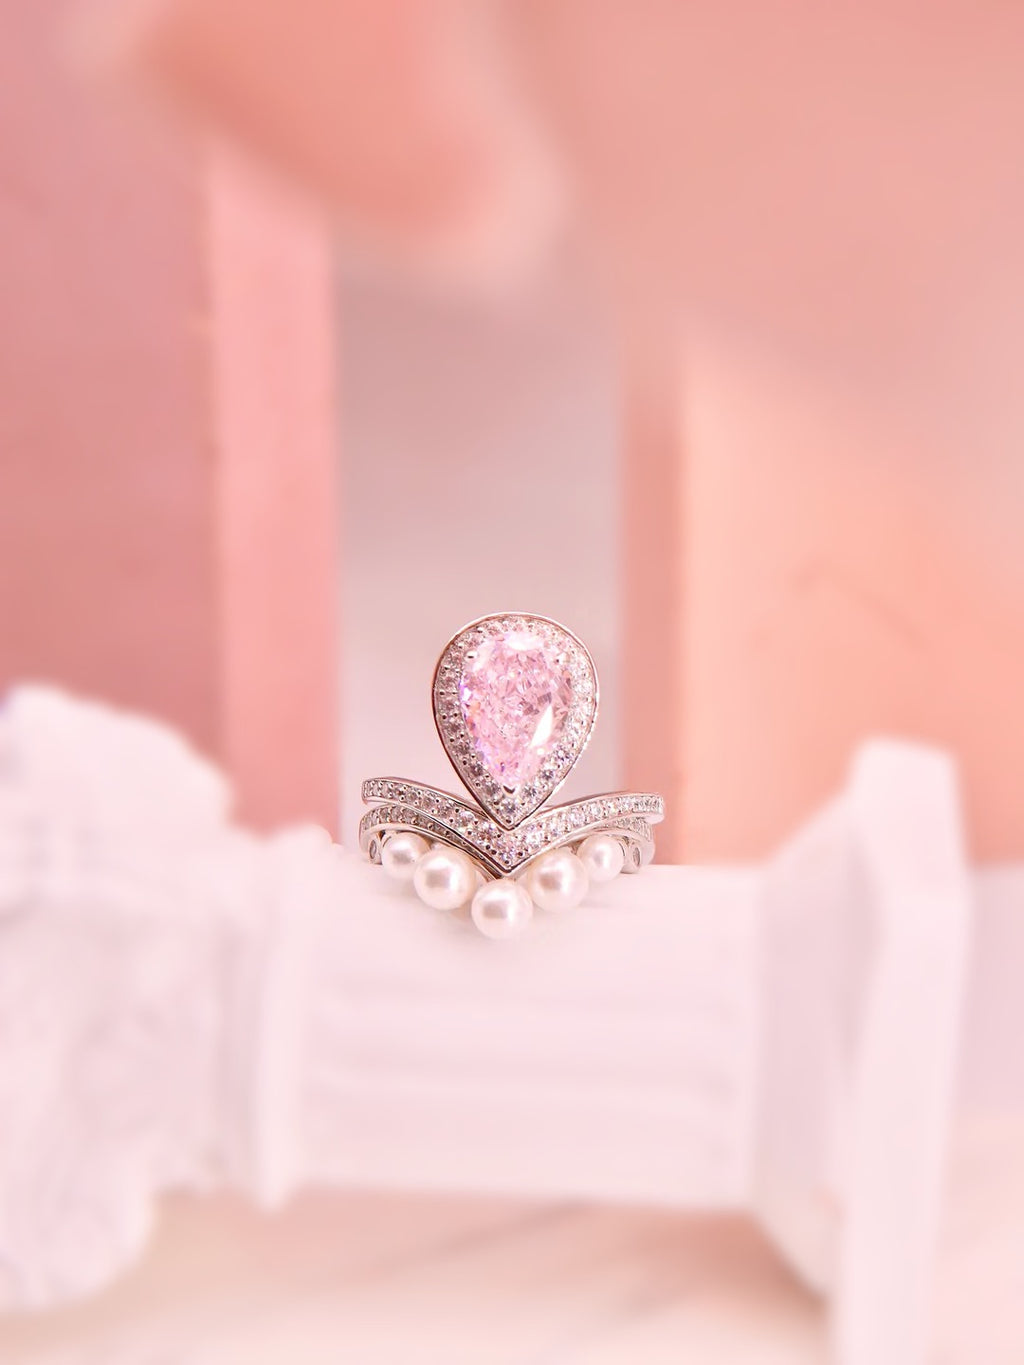 LAFIT· Heart of Venus (Sakura Pink) - Ring  仙氣櫻粉摩根石雙層戒指